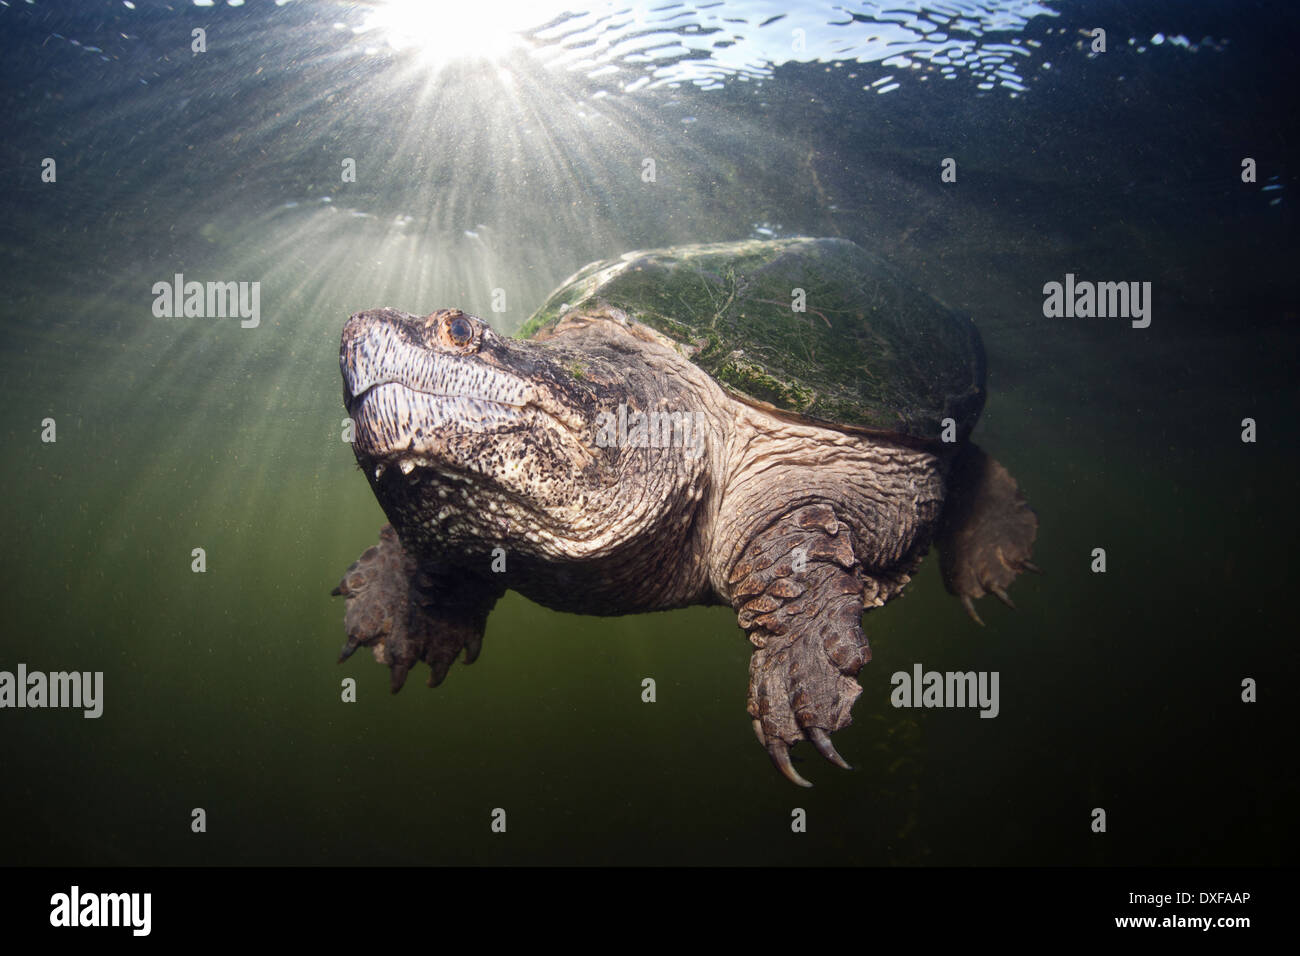 Common Snapping Turtle, Chelydra serpentina, Massachusetts, Cape Cod, USA Stock Photo